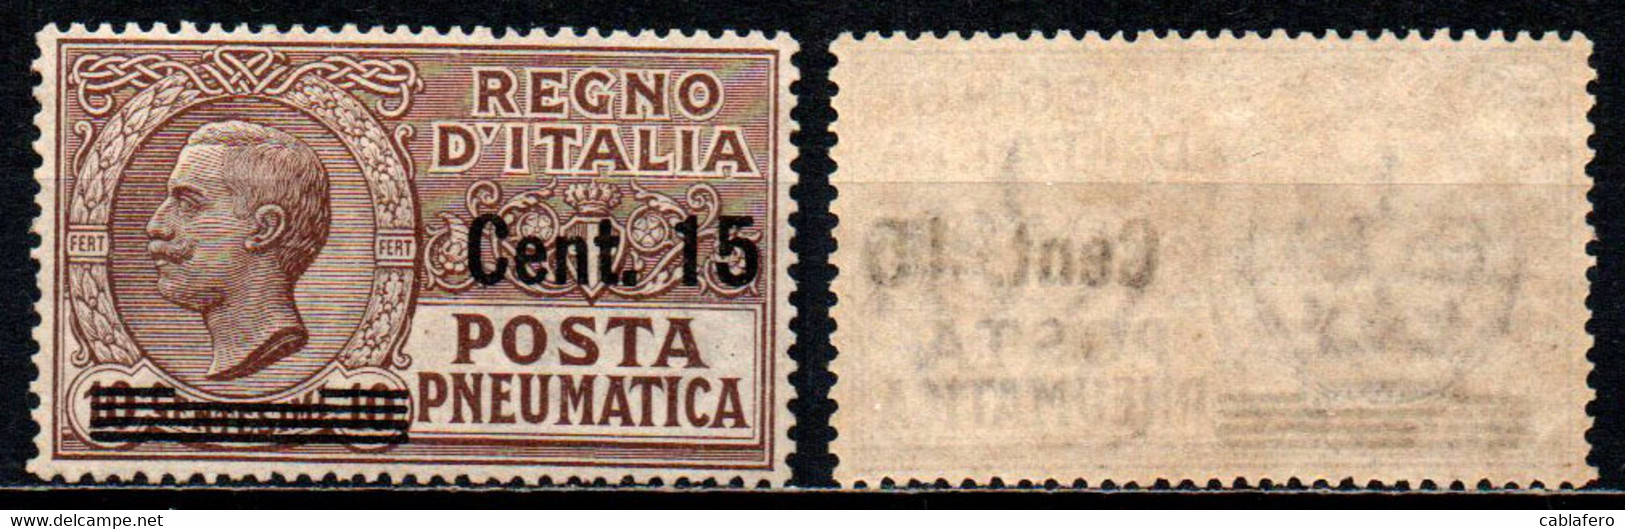 ITALIA REGNO - 1924 - EFFIGIE DI VITTORIO EMANUELE III - SOPRASTAMPA DA 15 CENT. SU 10 CENT. - MNH - Posta Pneumatica